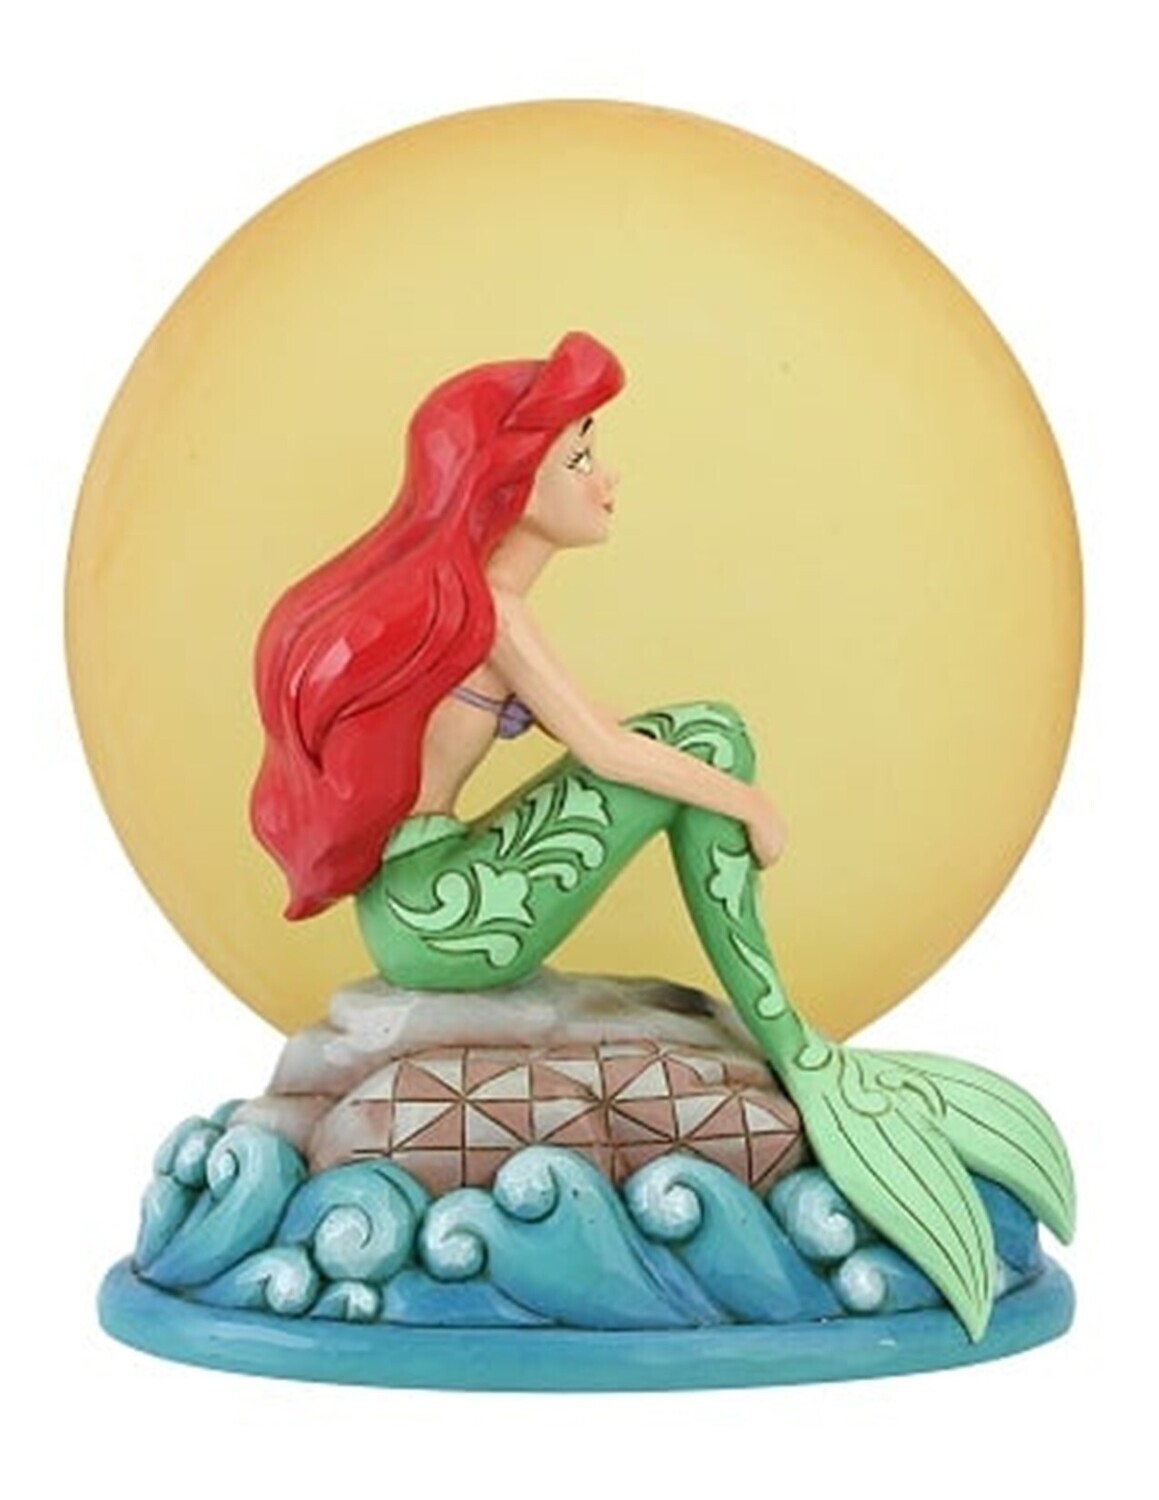 Jim Shore Disney Traditions "Mermaid by Moonlight" Ariel Figurine (6005954)